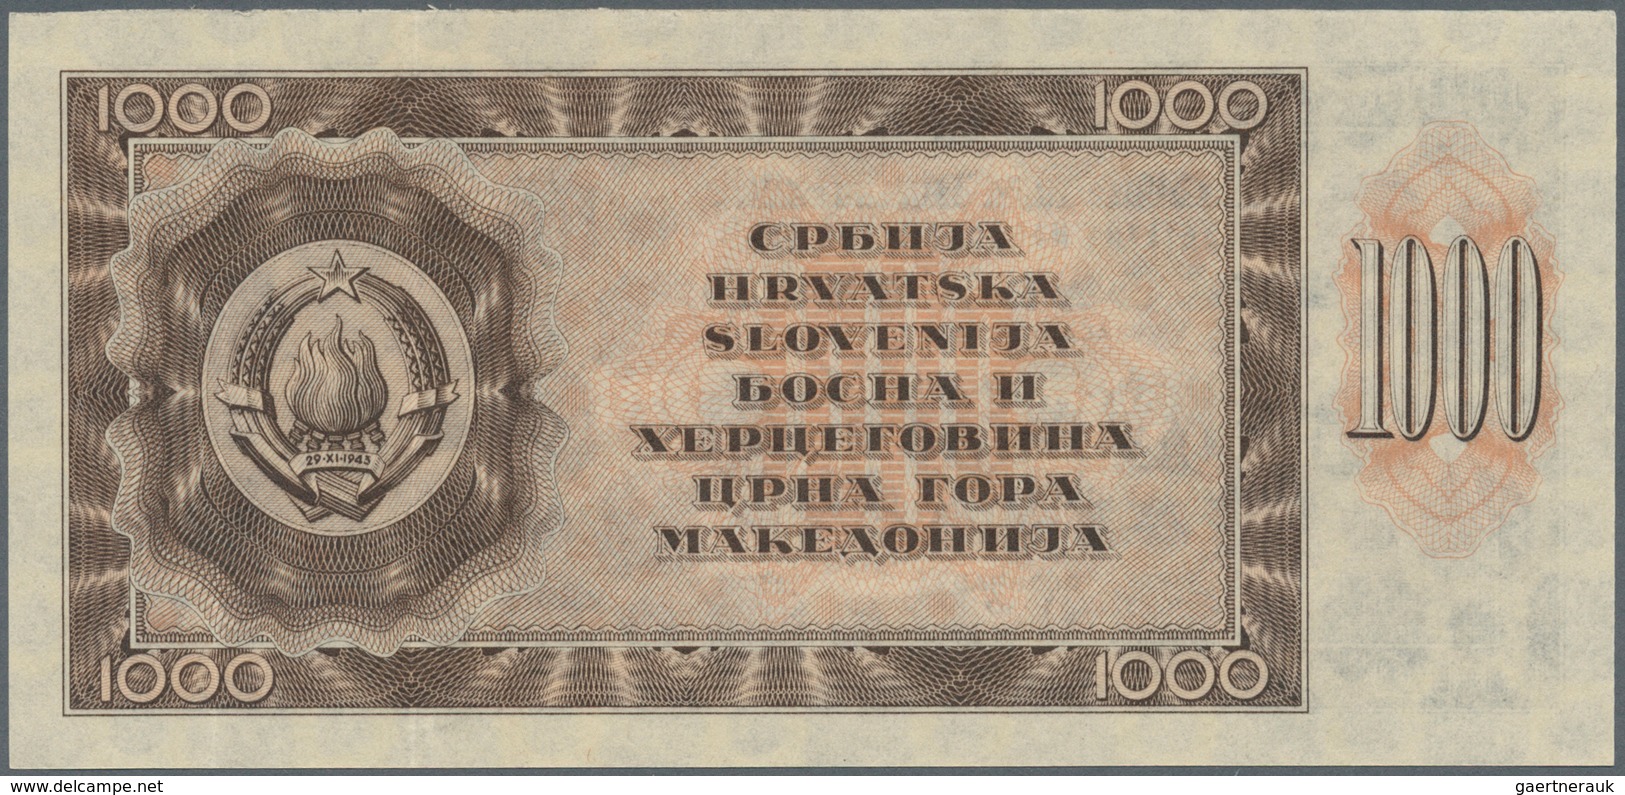 Yugoslavia / Jugoslavien: 1000 Dinara 1950, P.67x (not Issued), Minor Creases In The Paper, Tiny Cut - Yougoslavie